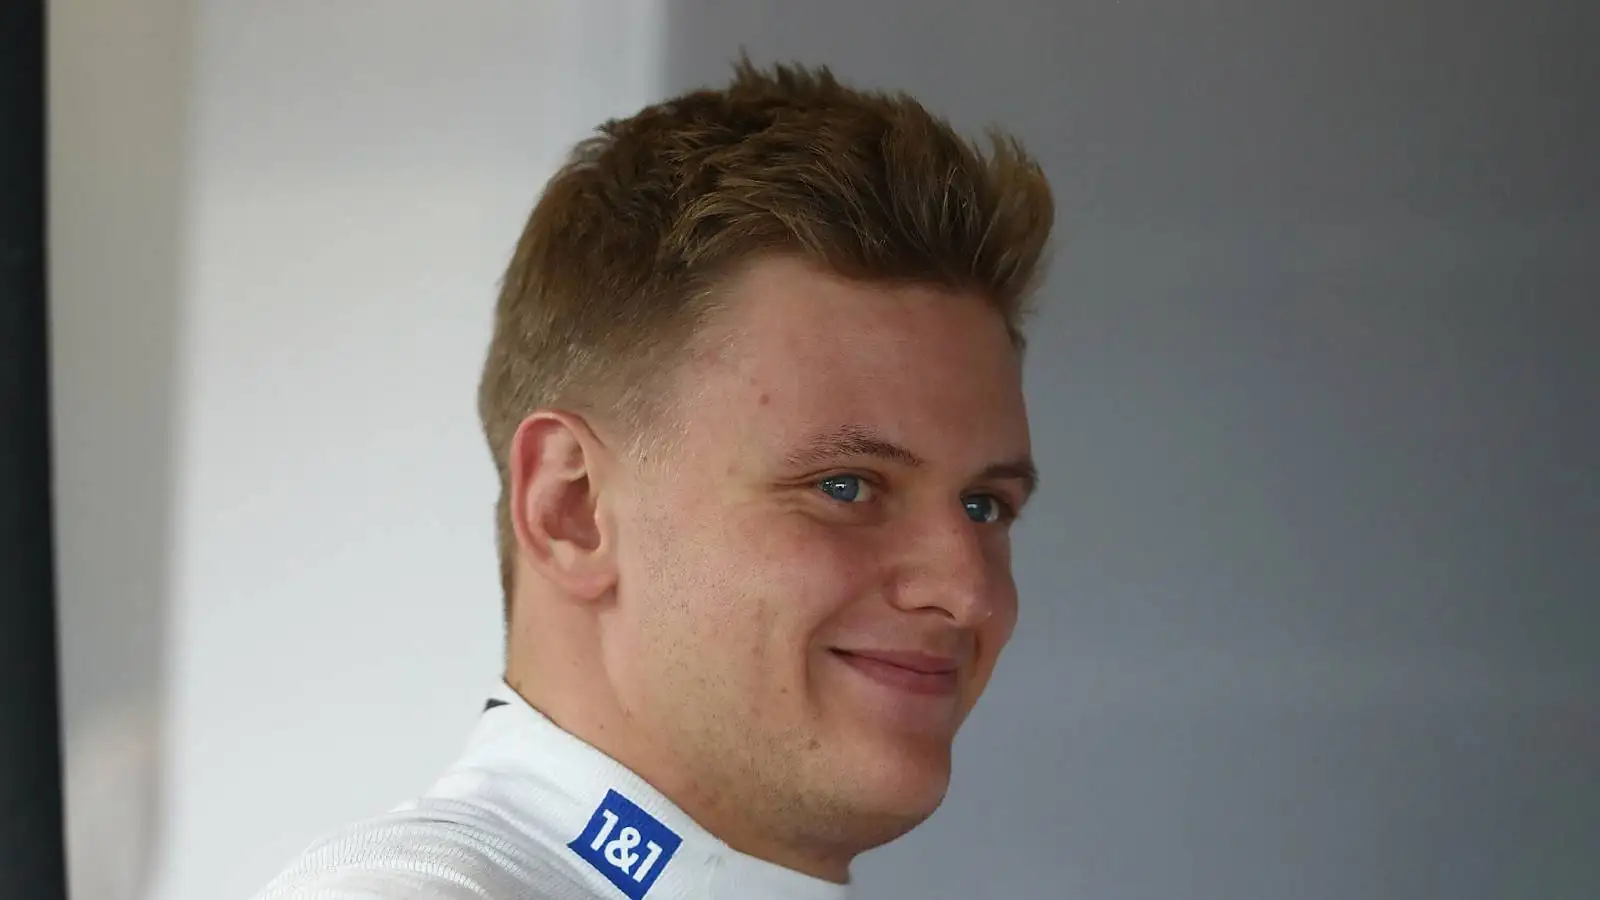 Mick Schumacher smiling at the Saudi Arabian GP. Jeddah March 2022.